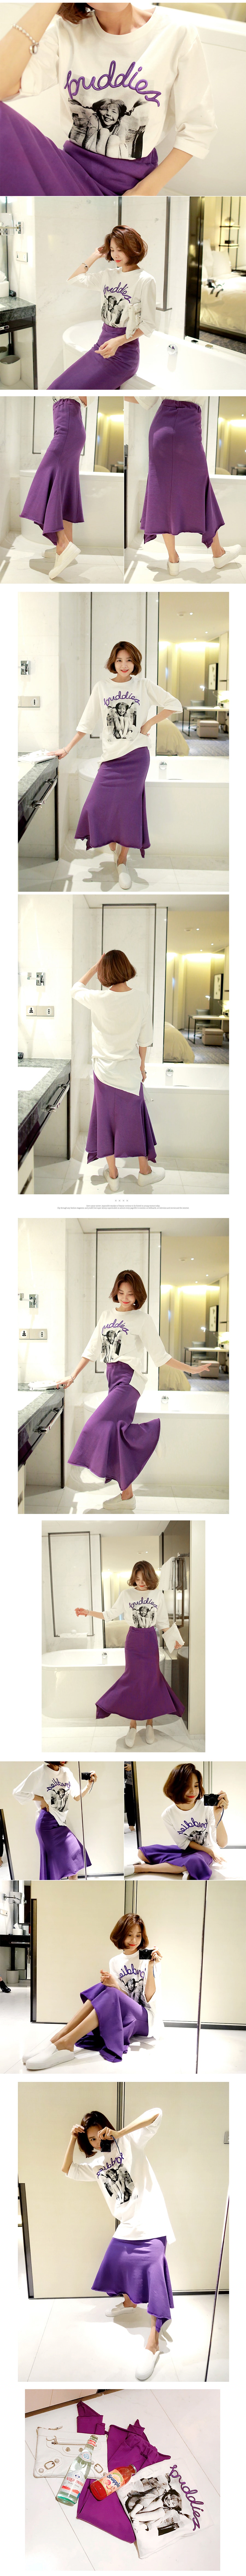 KOREA Unbalanced Long Skirt #Purple One Size(S-M) [Free Shipping]